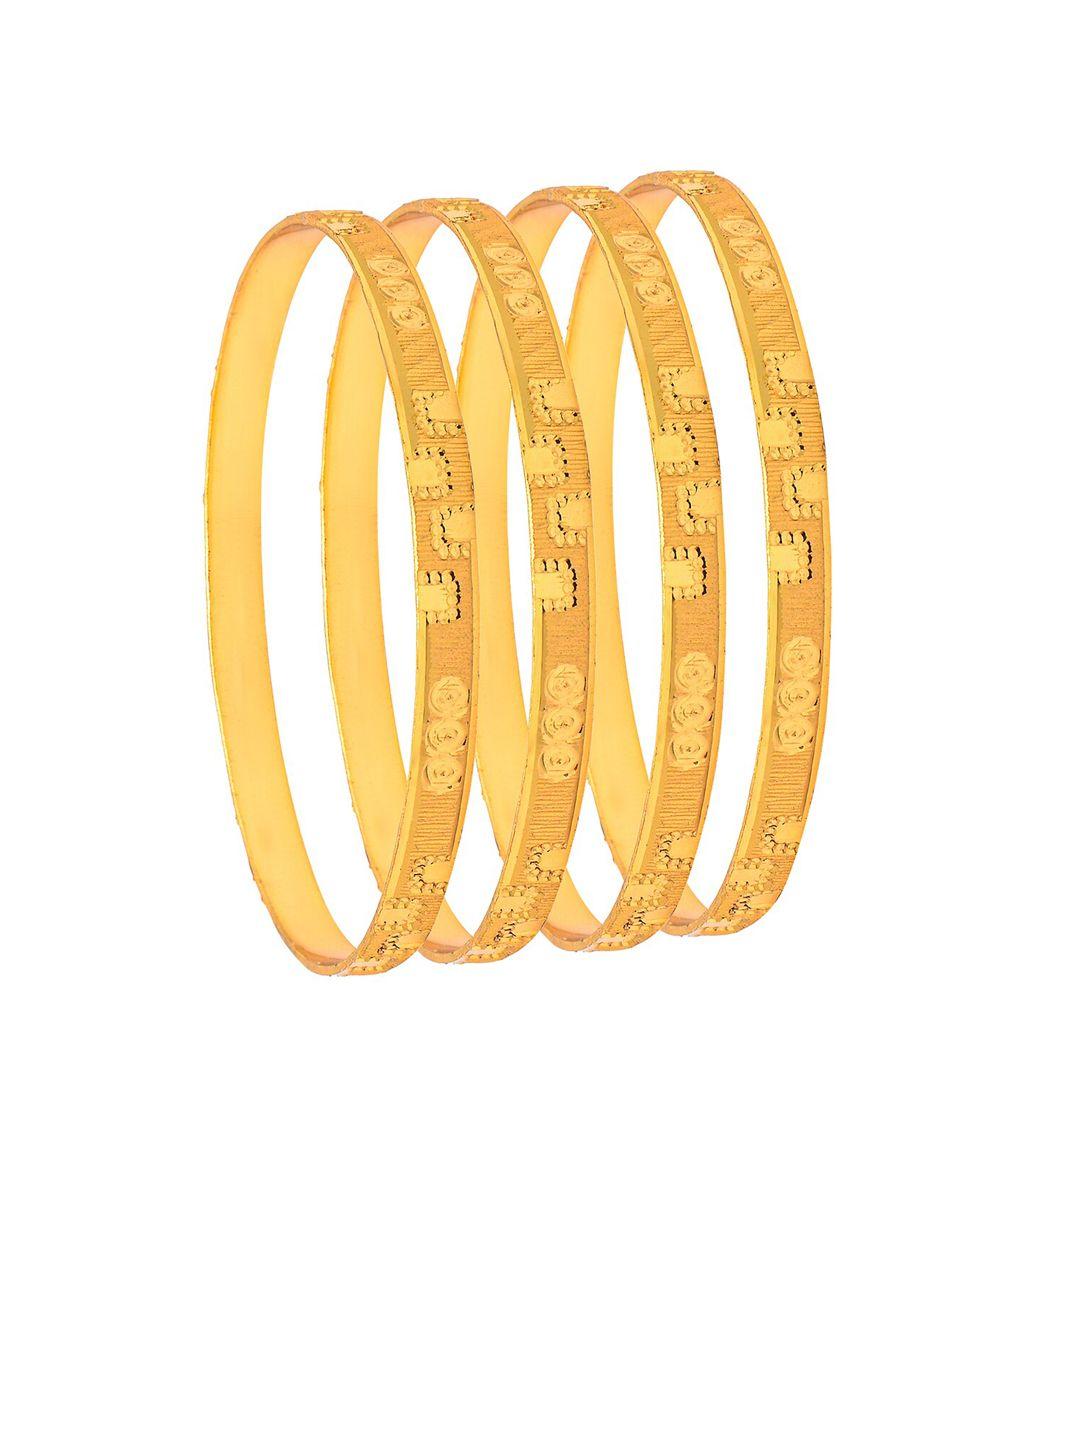 shining jewel - by shivansh set of 4 gold-plated bangles